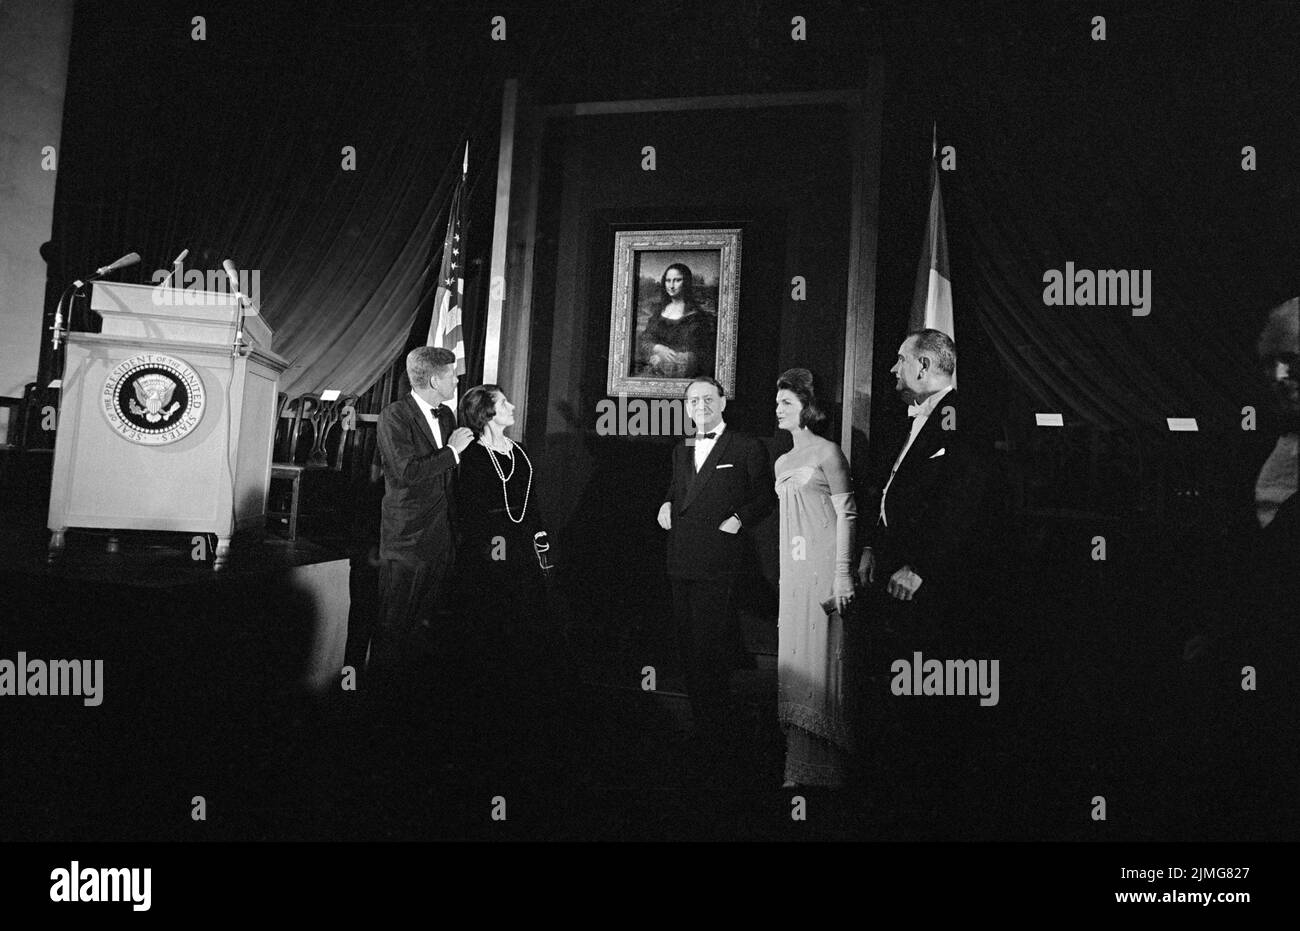 US-Präsident John Kennedy, US-First Lady Jacqueline Kennedy, US-Vizepräsident Lyndon B. Johnson und andere, die sich Mona Lisa, National Gallery of Art, Washington, D.C., USA, Marion S. Trikosko, U.S. News & World Report Magazine Photograph Collection, 8. Januar 1963 Stockfoto